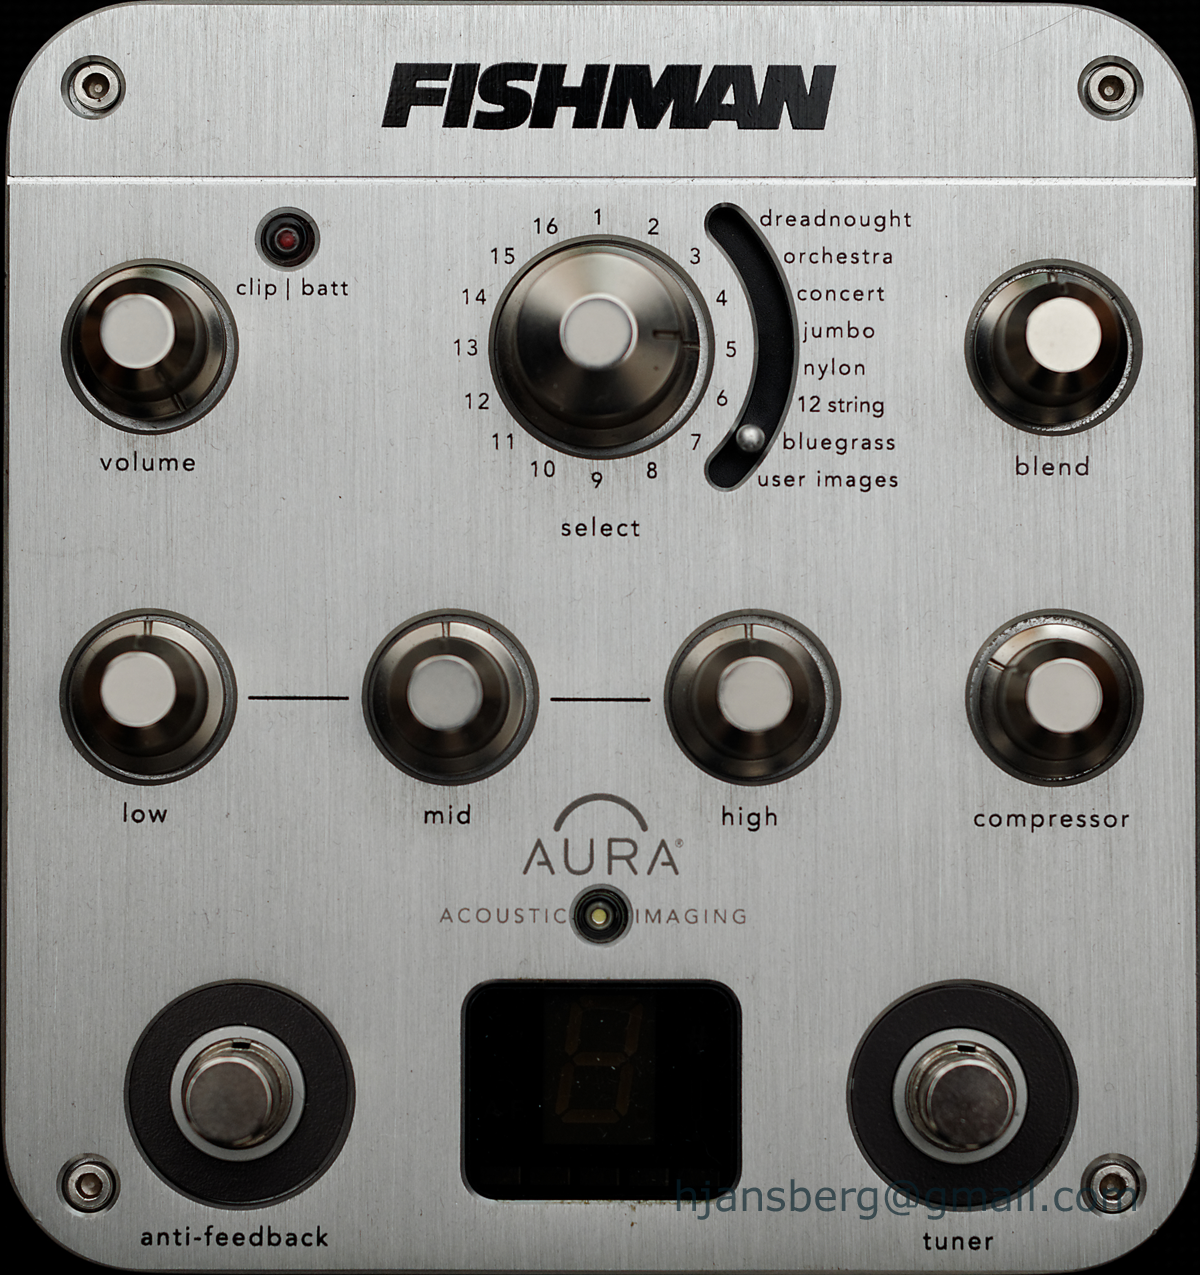 The Jansberg Blog: Fishman Aura Spectrum DI - part I